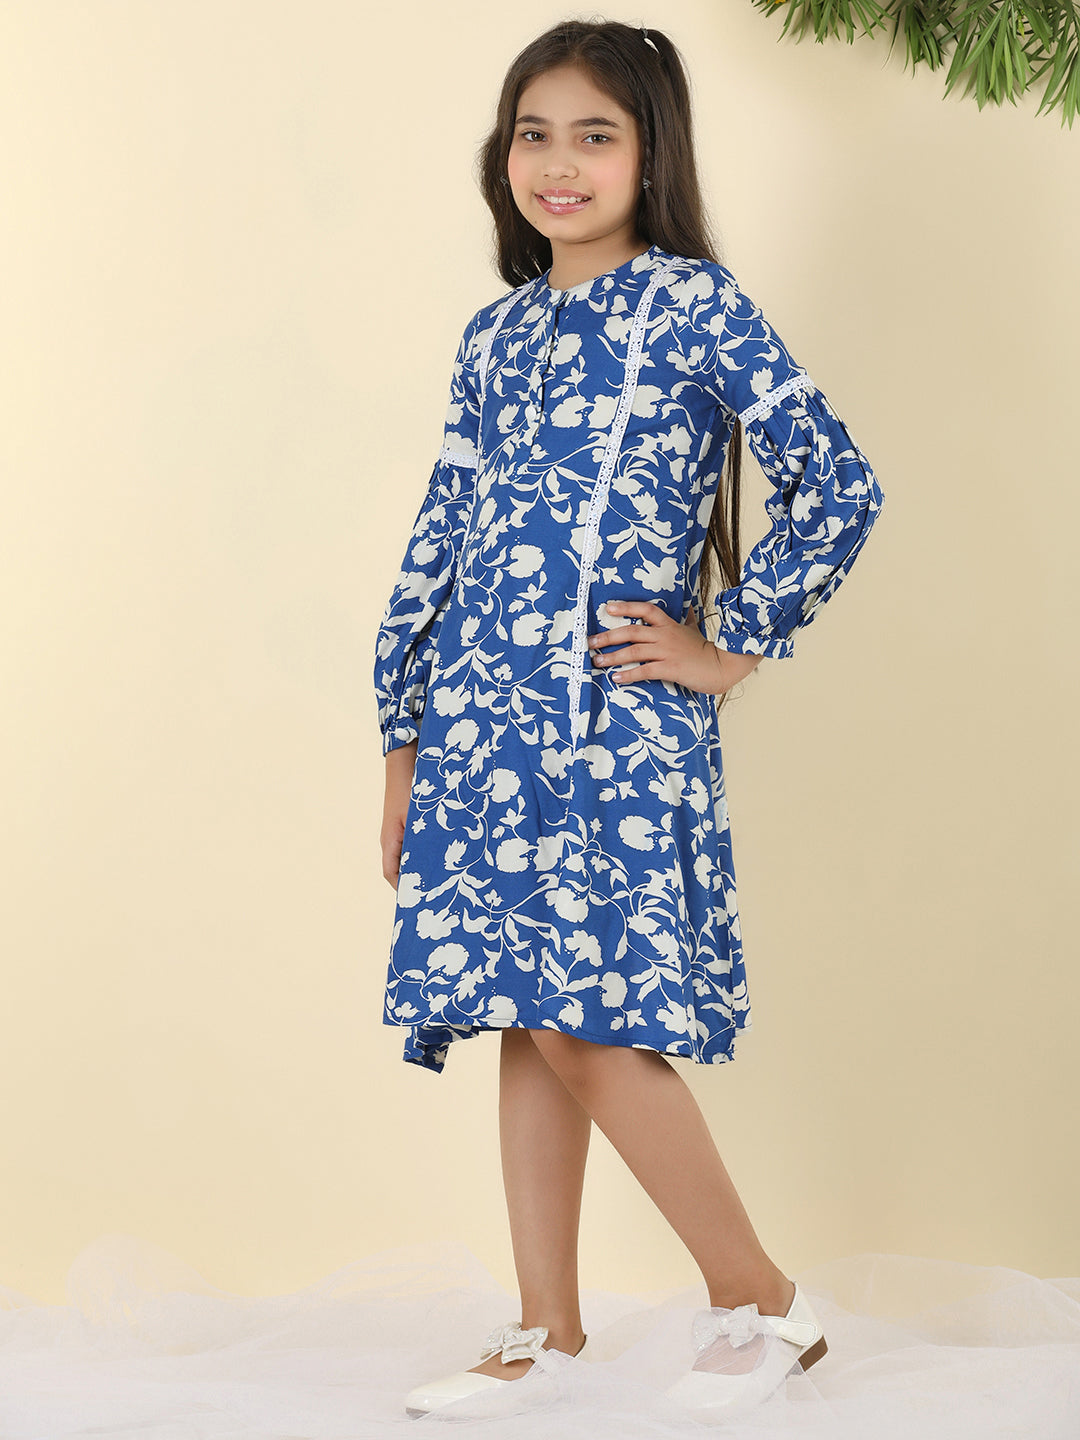 Cutiekins Girls Round Neck Tropical Print Dress -Dark Blue & White